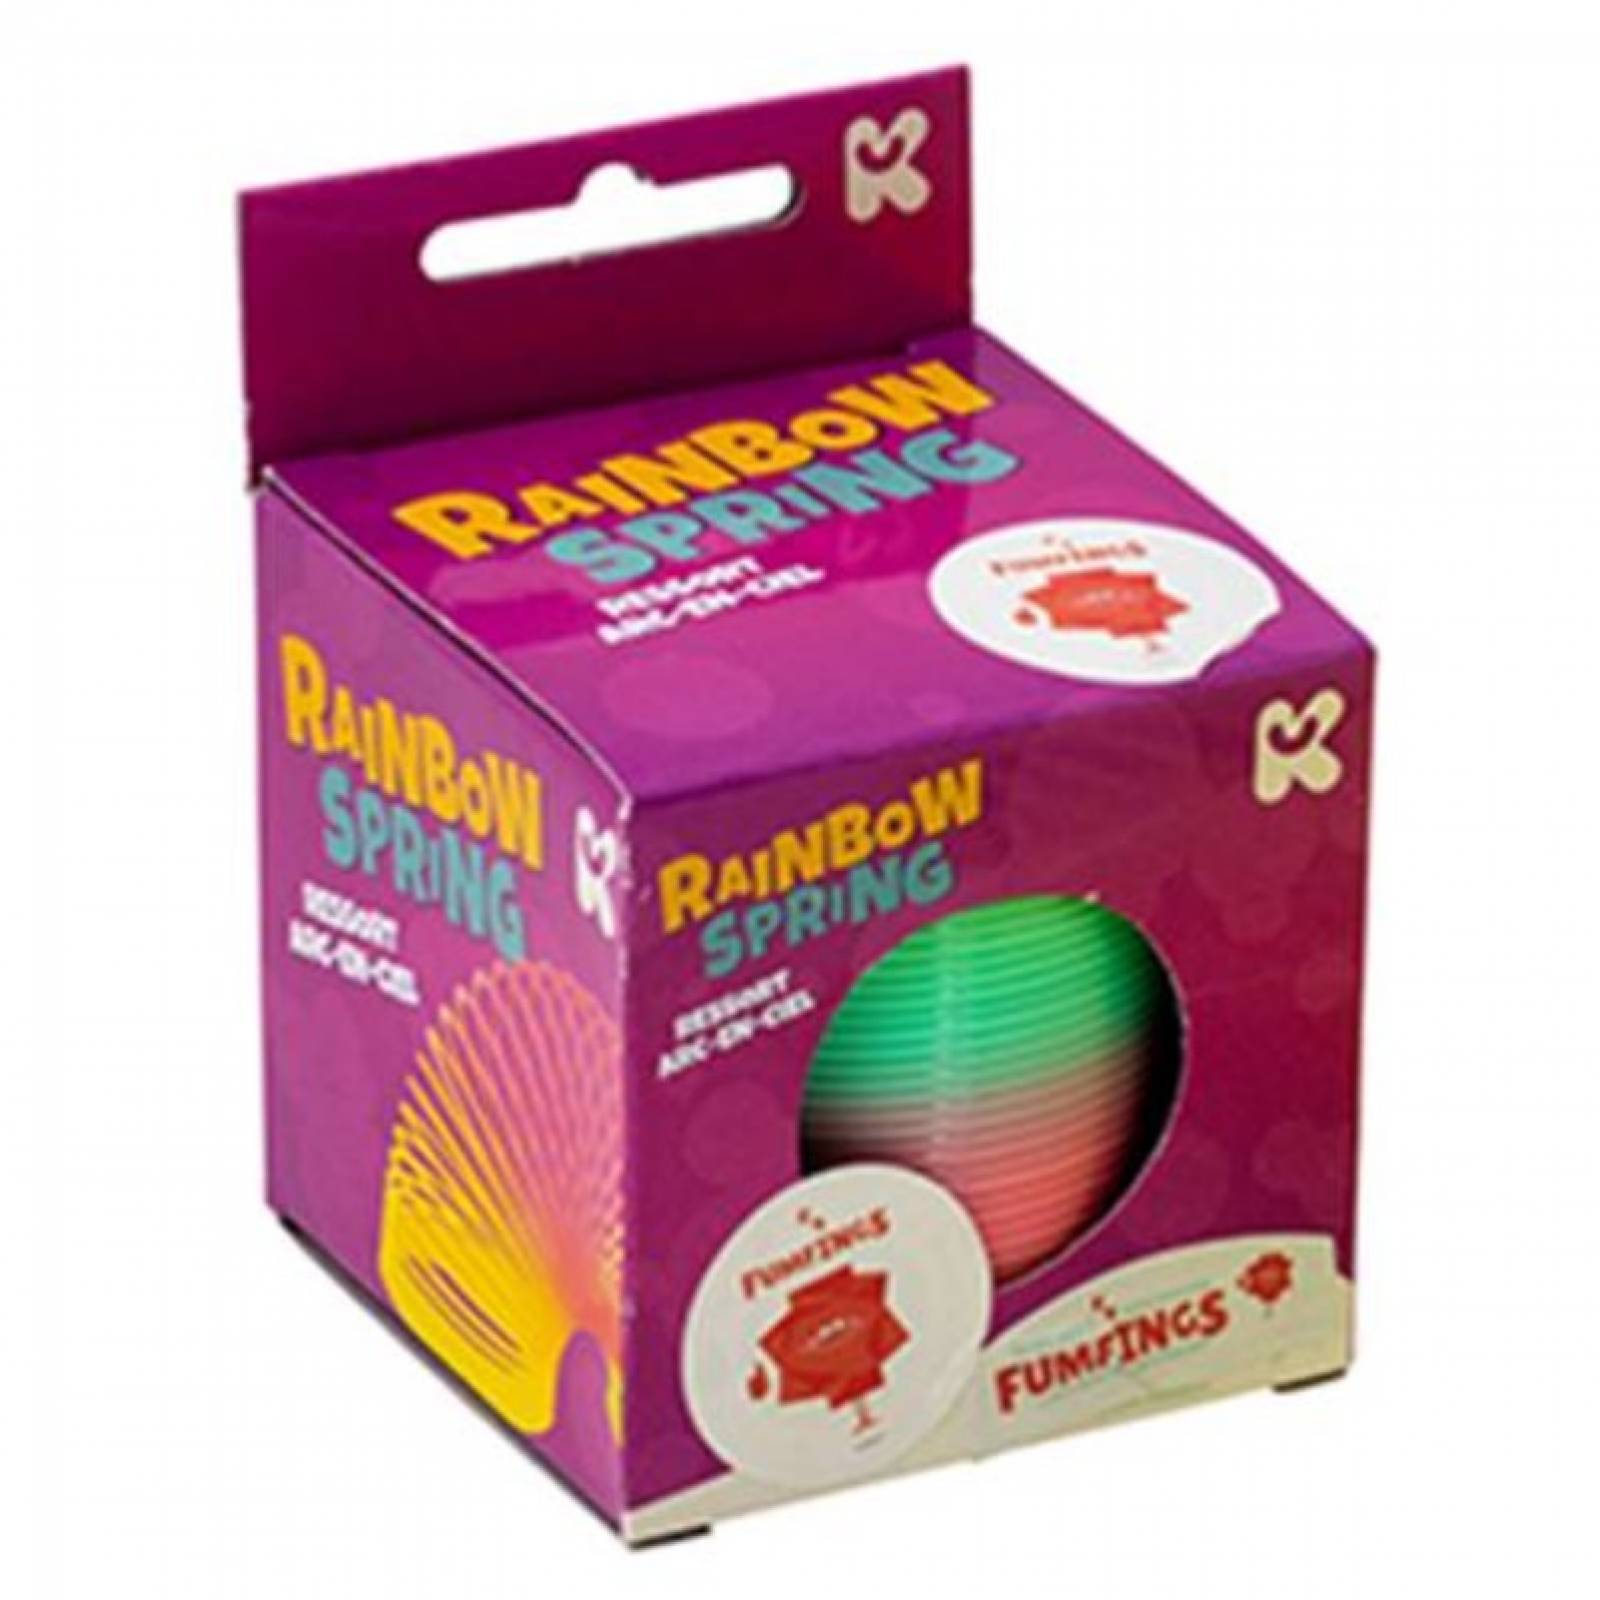 Rainbow Slinky Springy Toy 3+ thumbnails